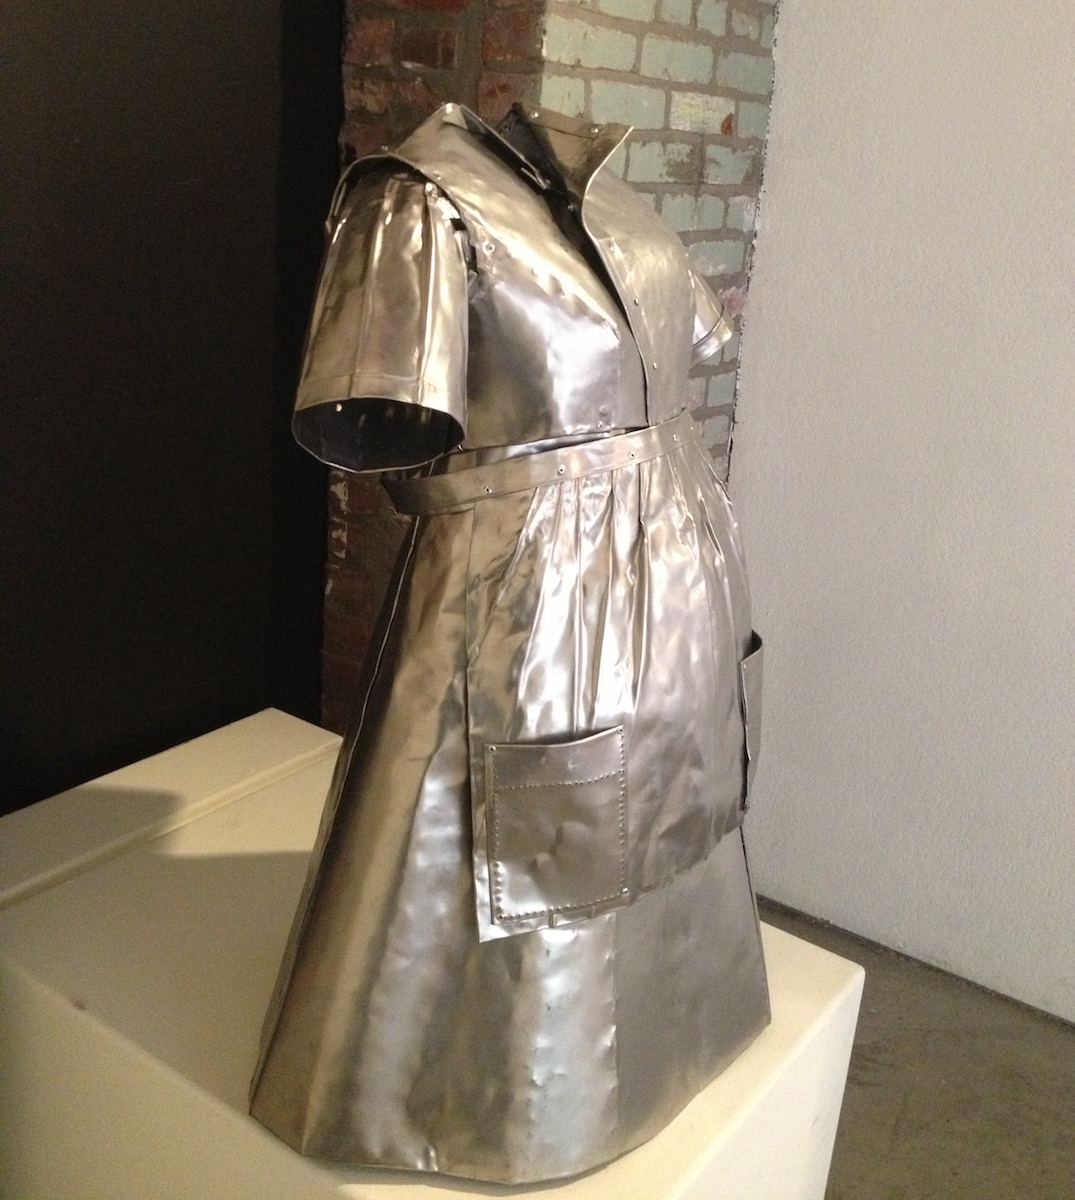 16. Armor for Rufina Amaya, 2014